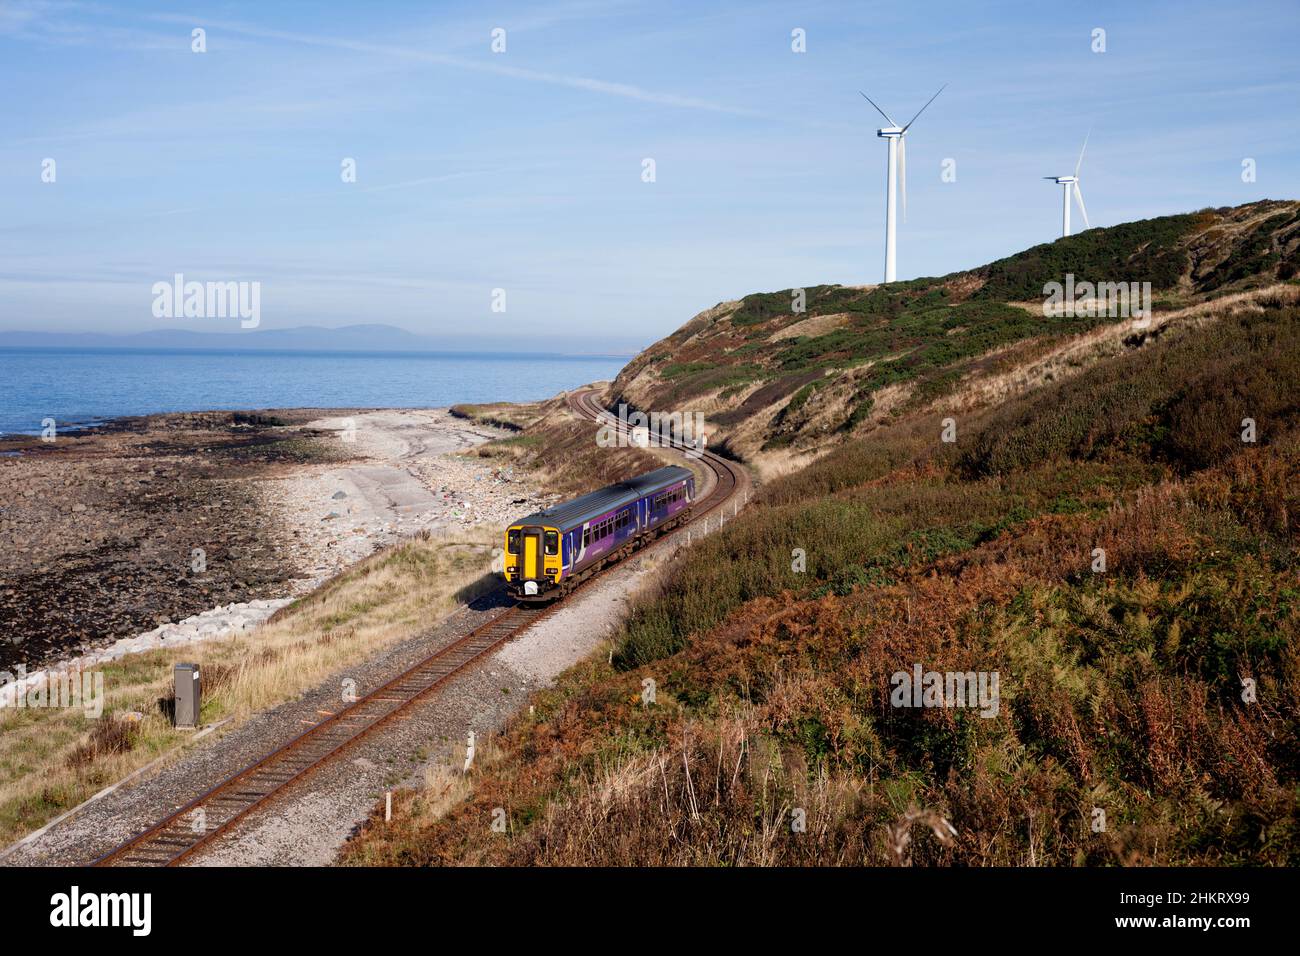 Northern Rail class 156 sprinter train 156481 by the sea at Lowca on the scenic Cumbrian coast railway line Stock Photo